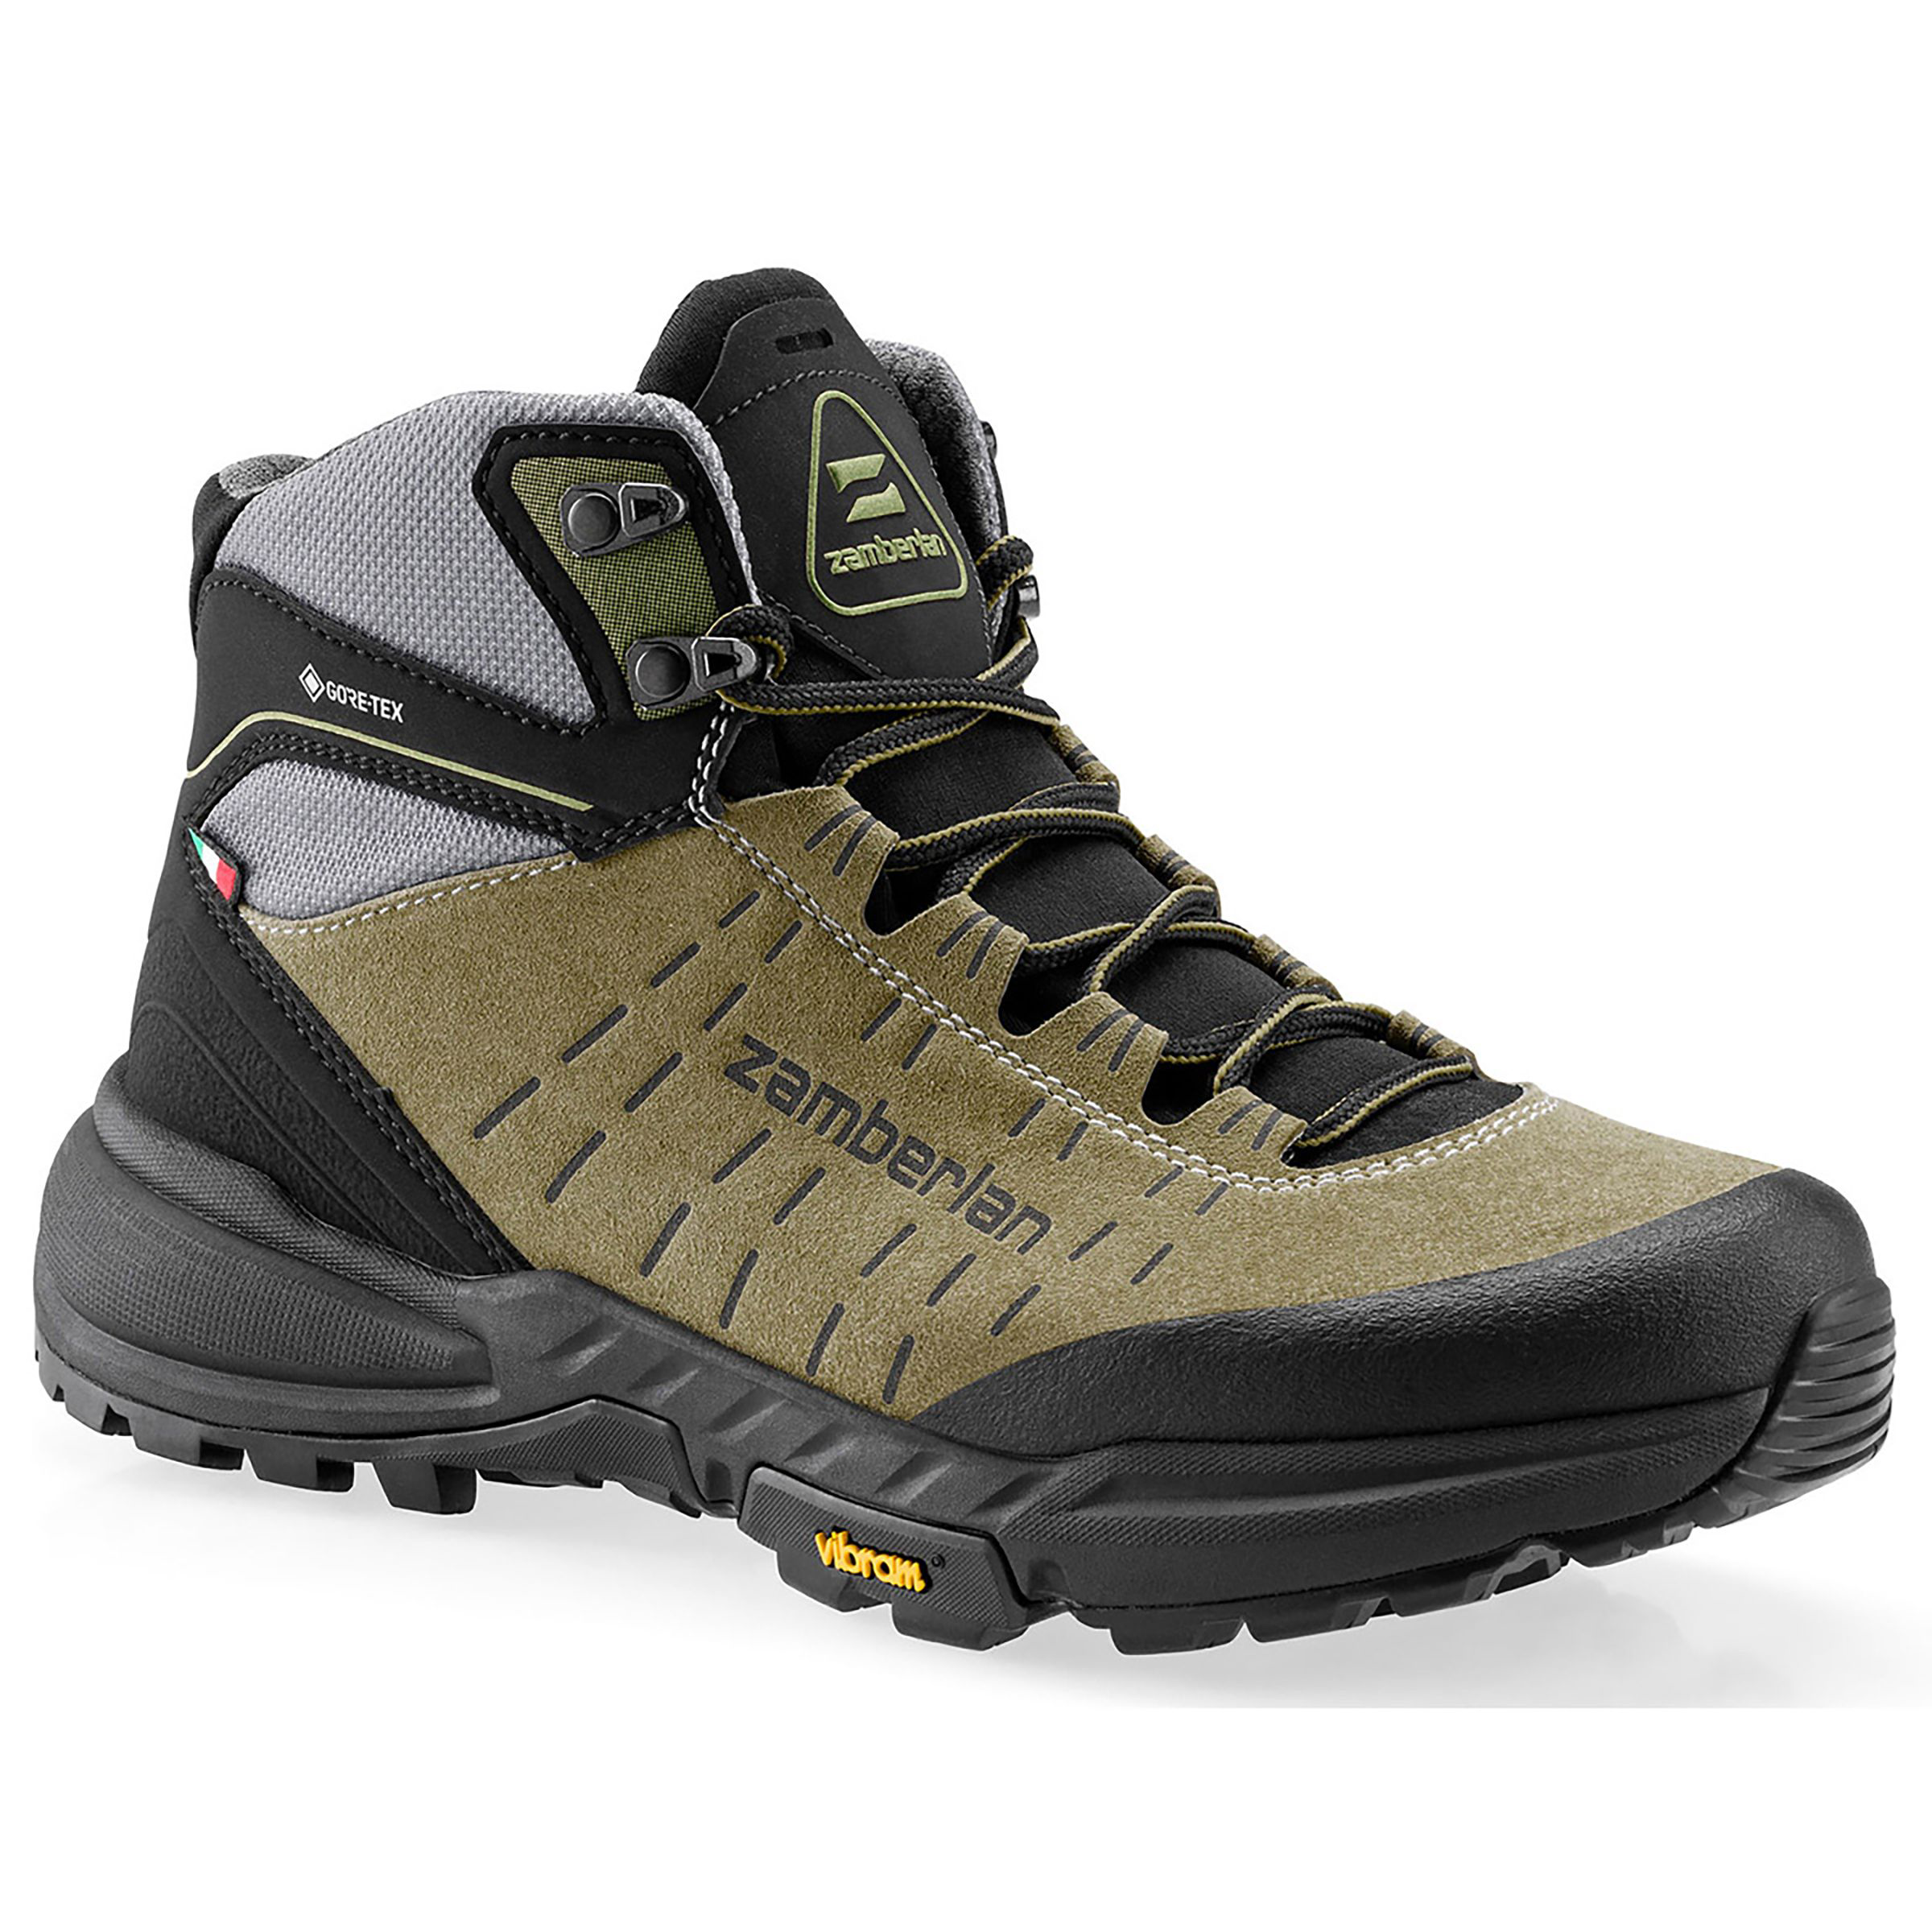 Zamberlan 334 Circe GTX Waterproof Hiking Boots for Ladies - Green - 9.5M